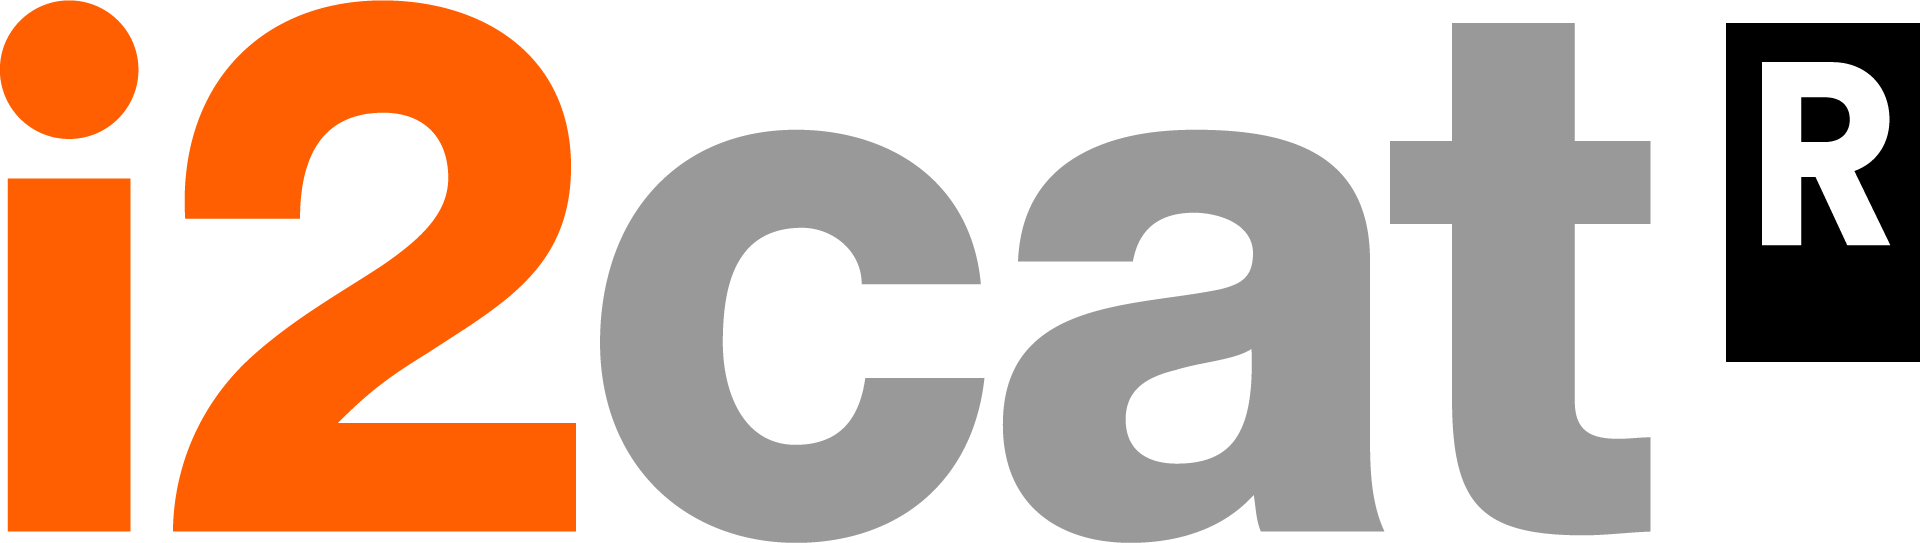 i2cat logo